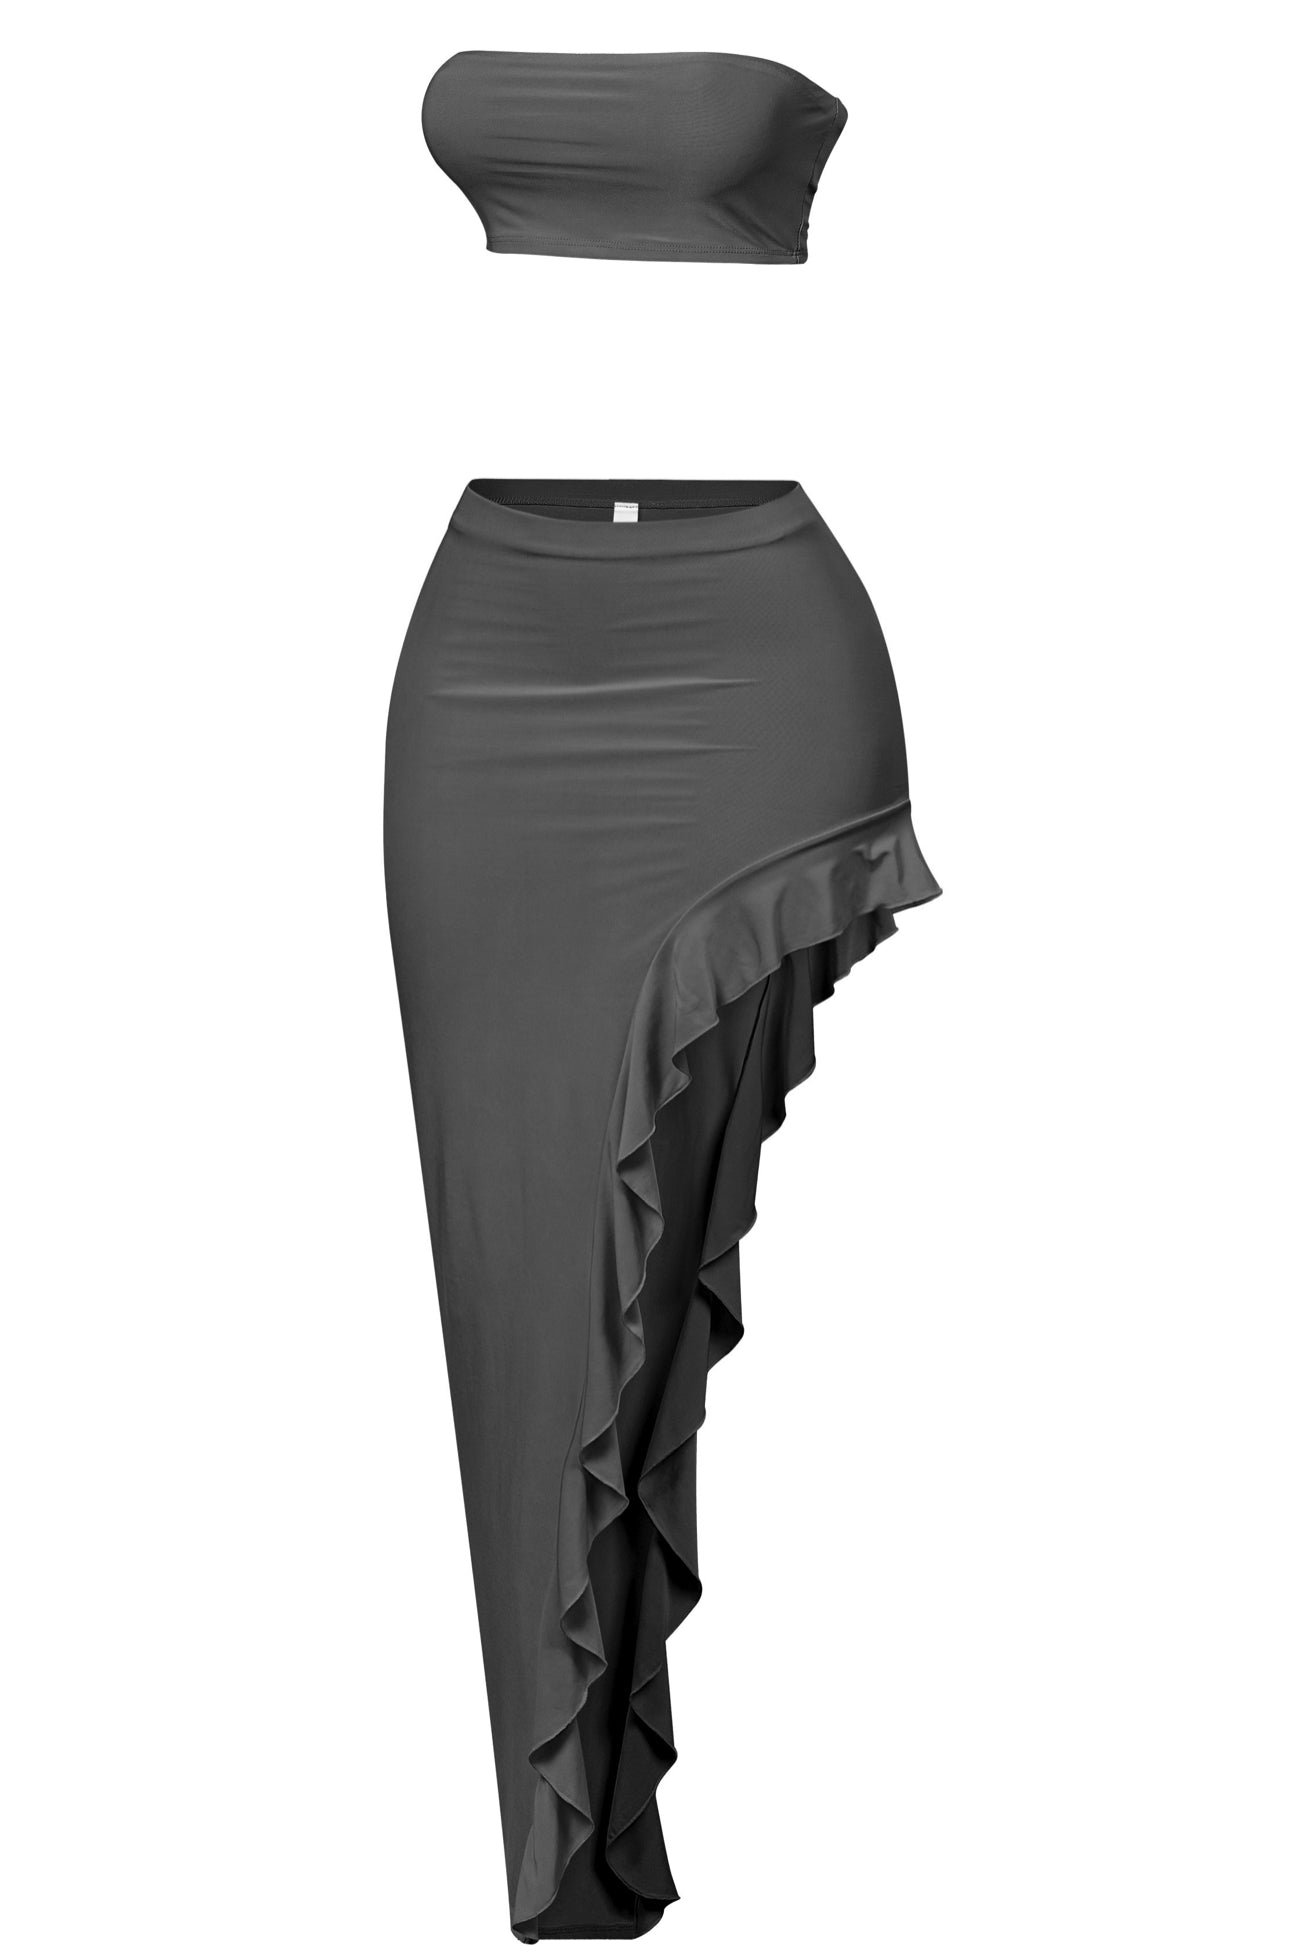 Naylea Ruffled Skirt Set (Black)